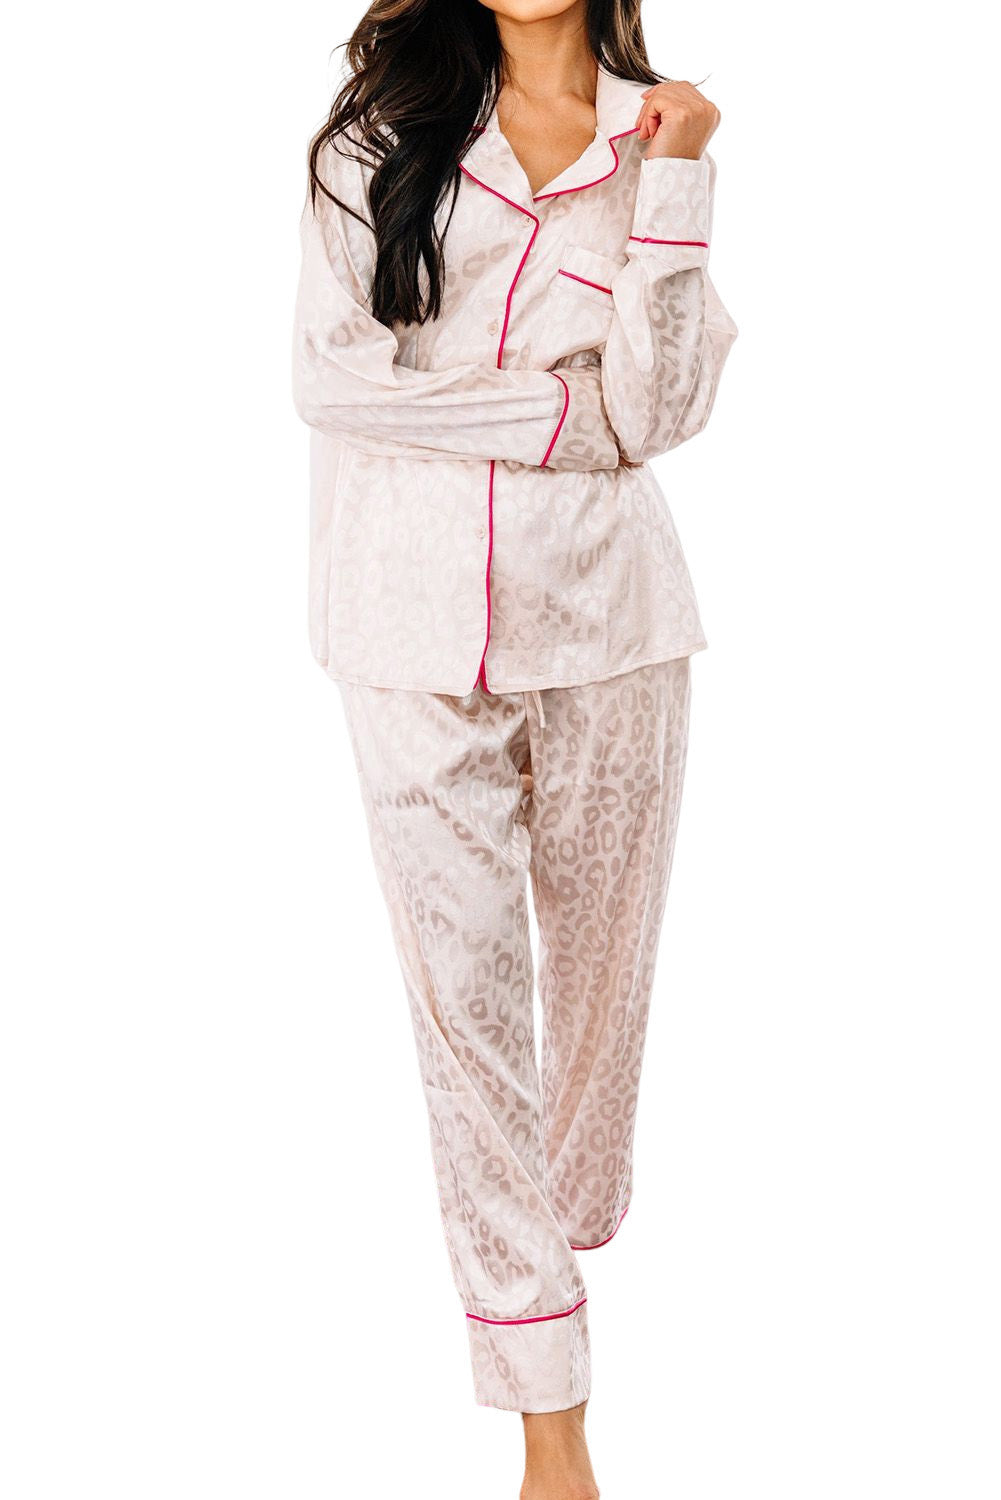 LC15356-1-S, LC15356-1-M, LC15356-1-L, LC15356-1-XL, White Satin Pajama Set Women Leopard Long Sleeve Sleepwear